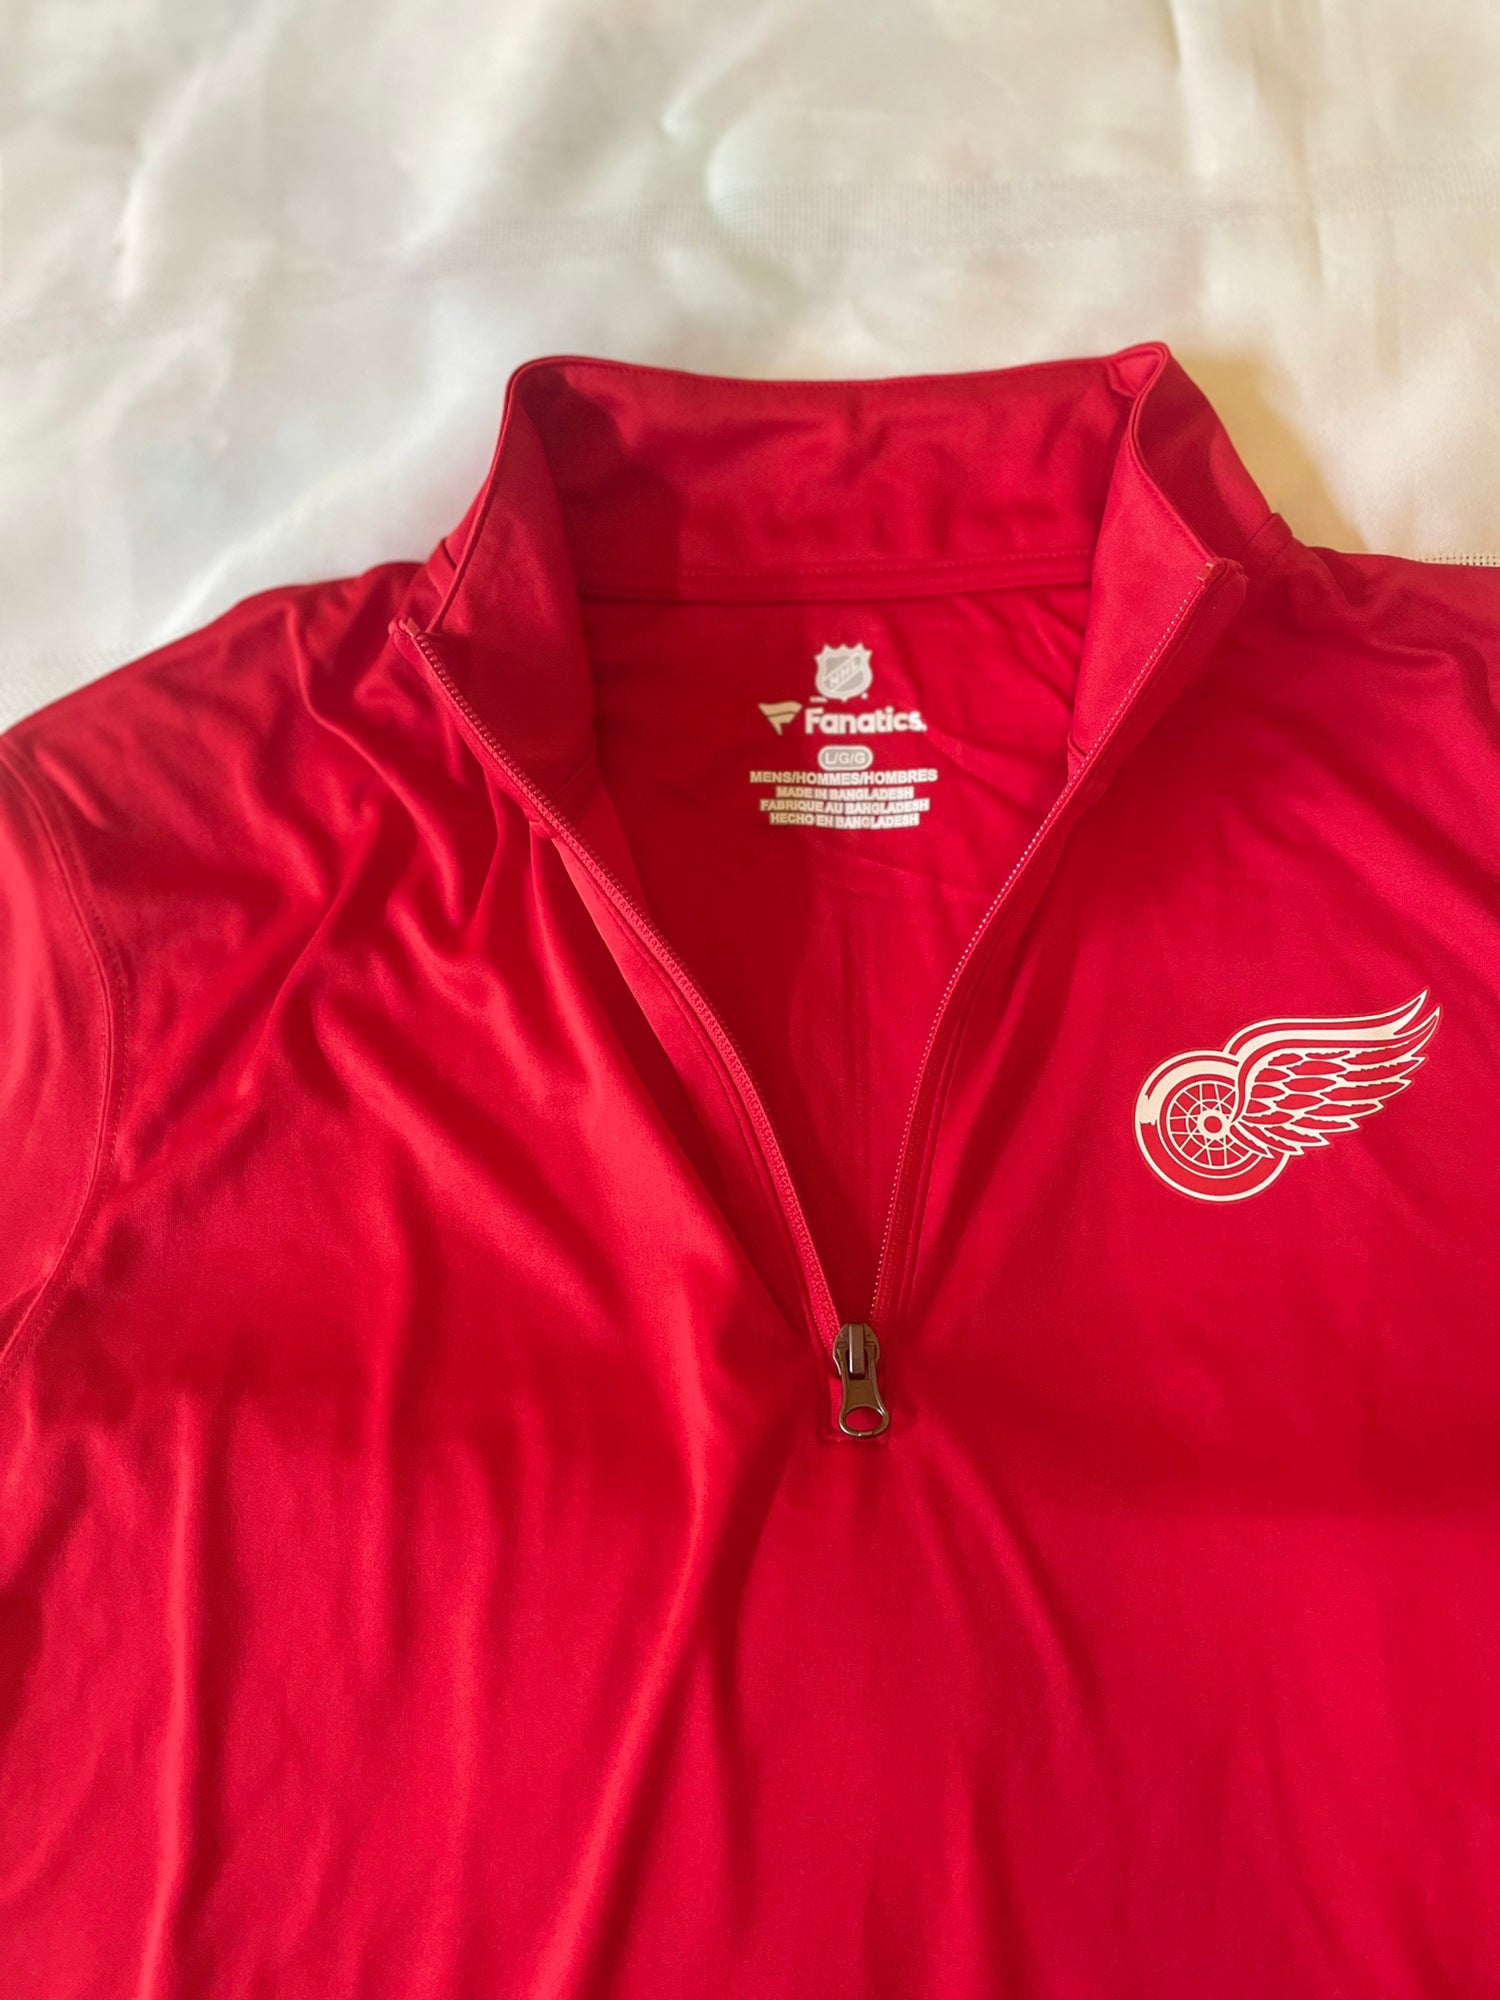 Men's NHL Detroit Red Wings Fanatics Branded Authentic Pro Locker